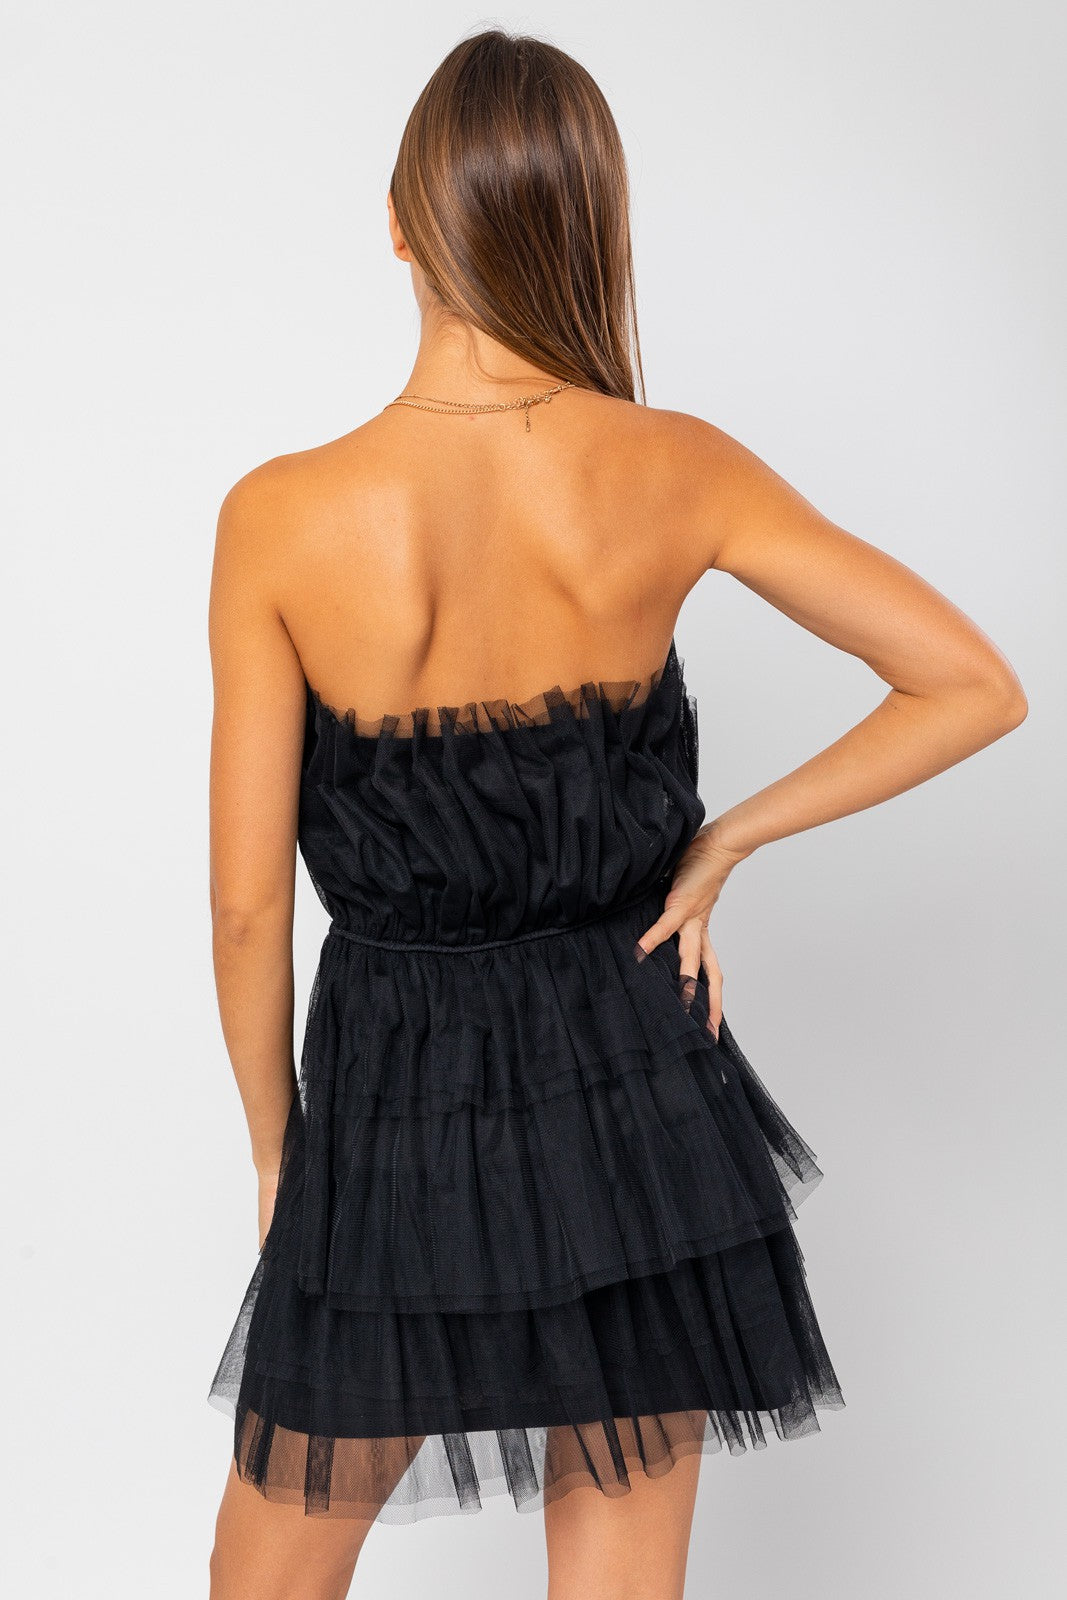 Flirty and Fun Off Shoulder Layered Mesh Dress - Szua Store